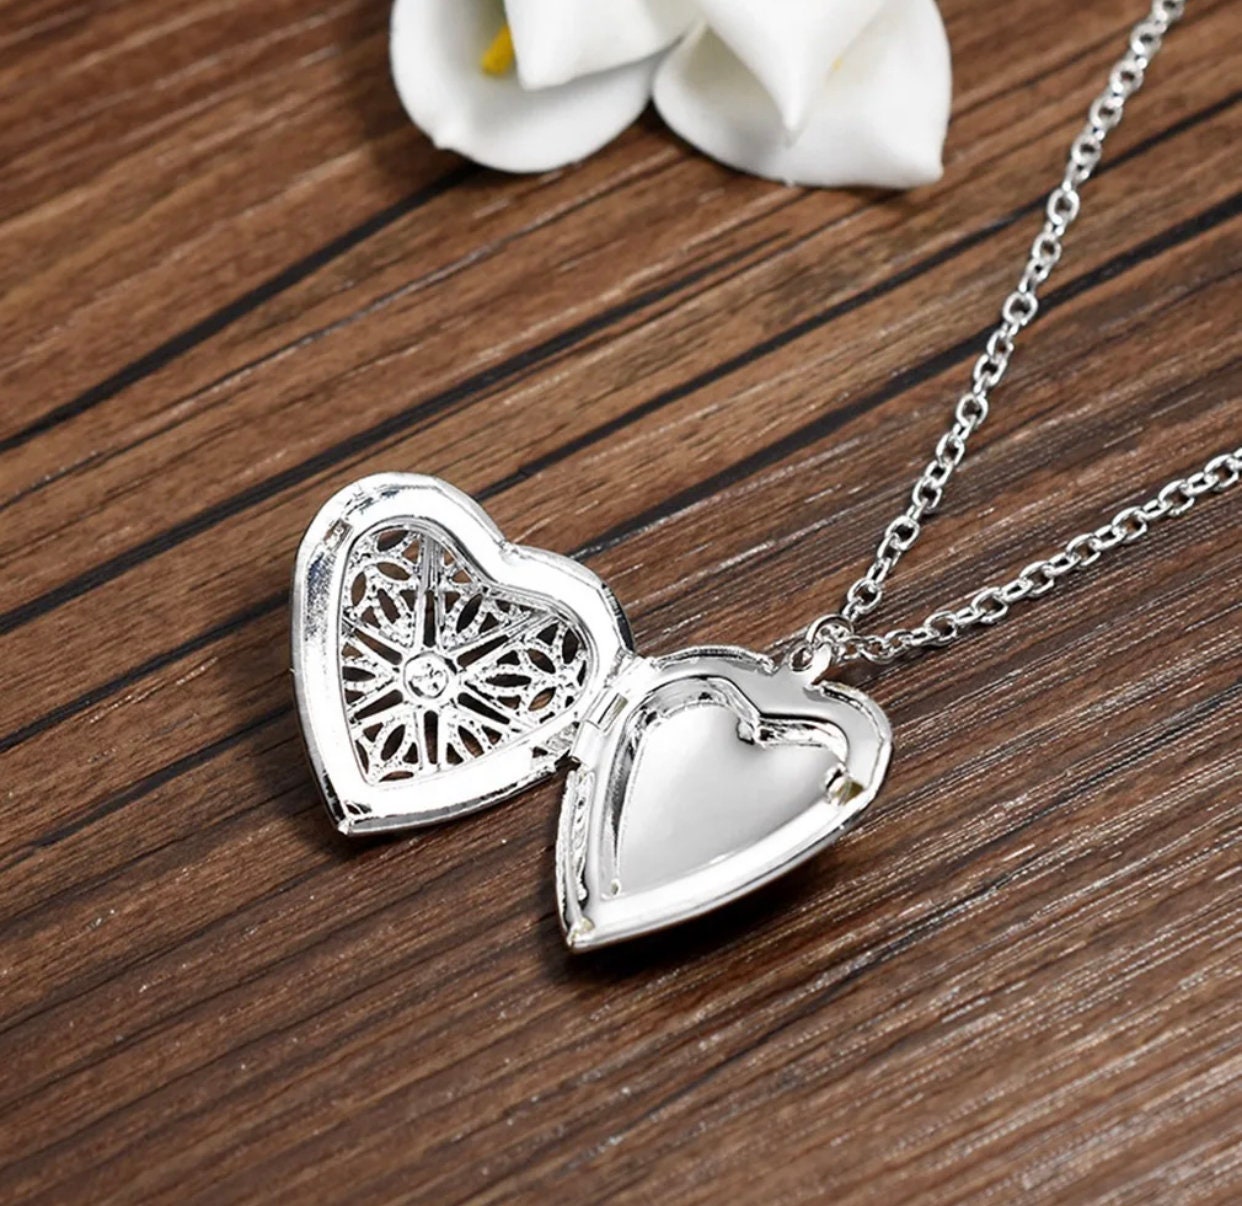 Pink Glitter Heart Necklace / Heart Locket Necklace / Rose Gold Locket / Fantasy Locket / Valentines Day / Valentine Gift / Gift for Her